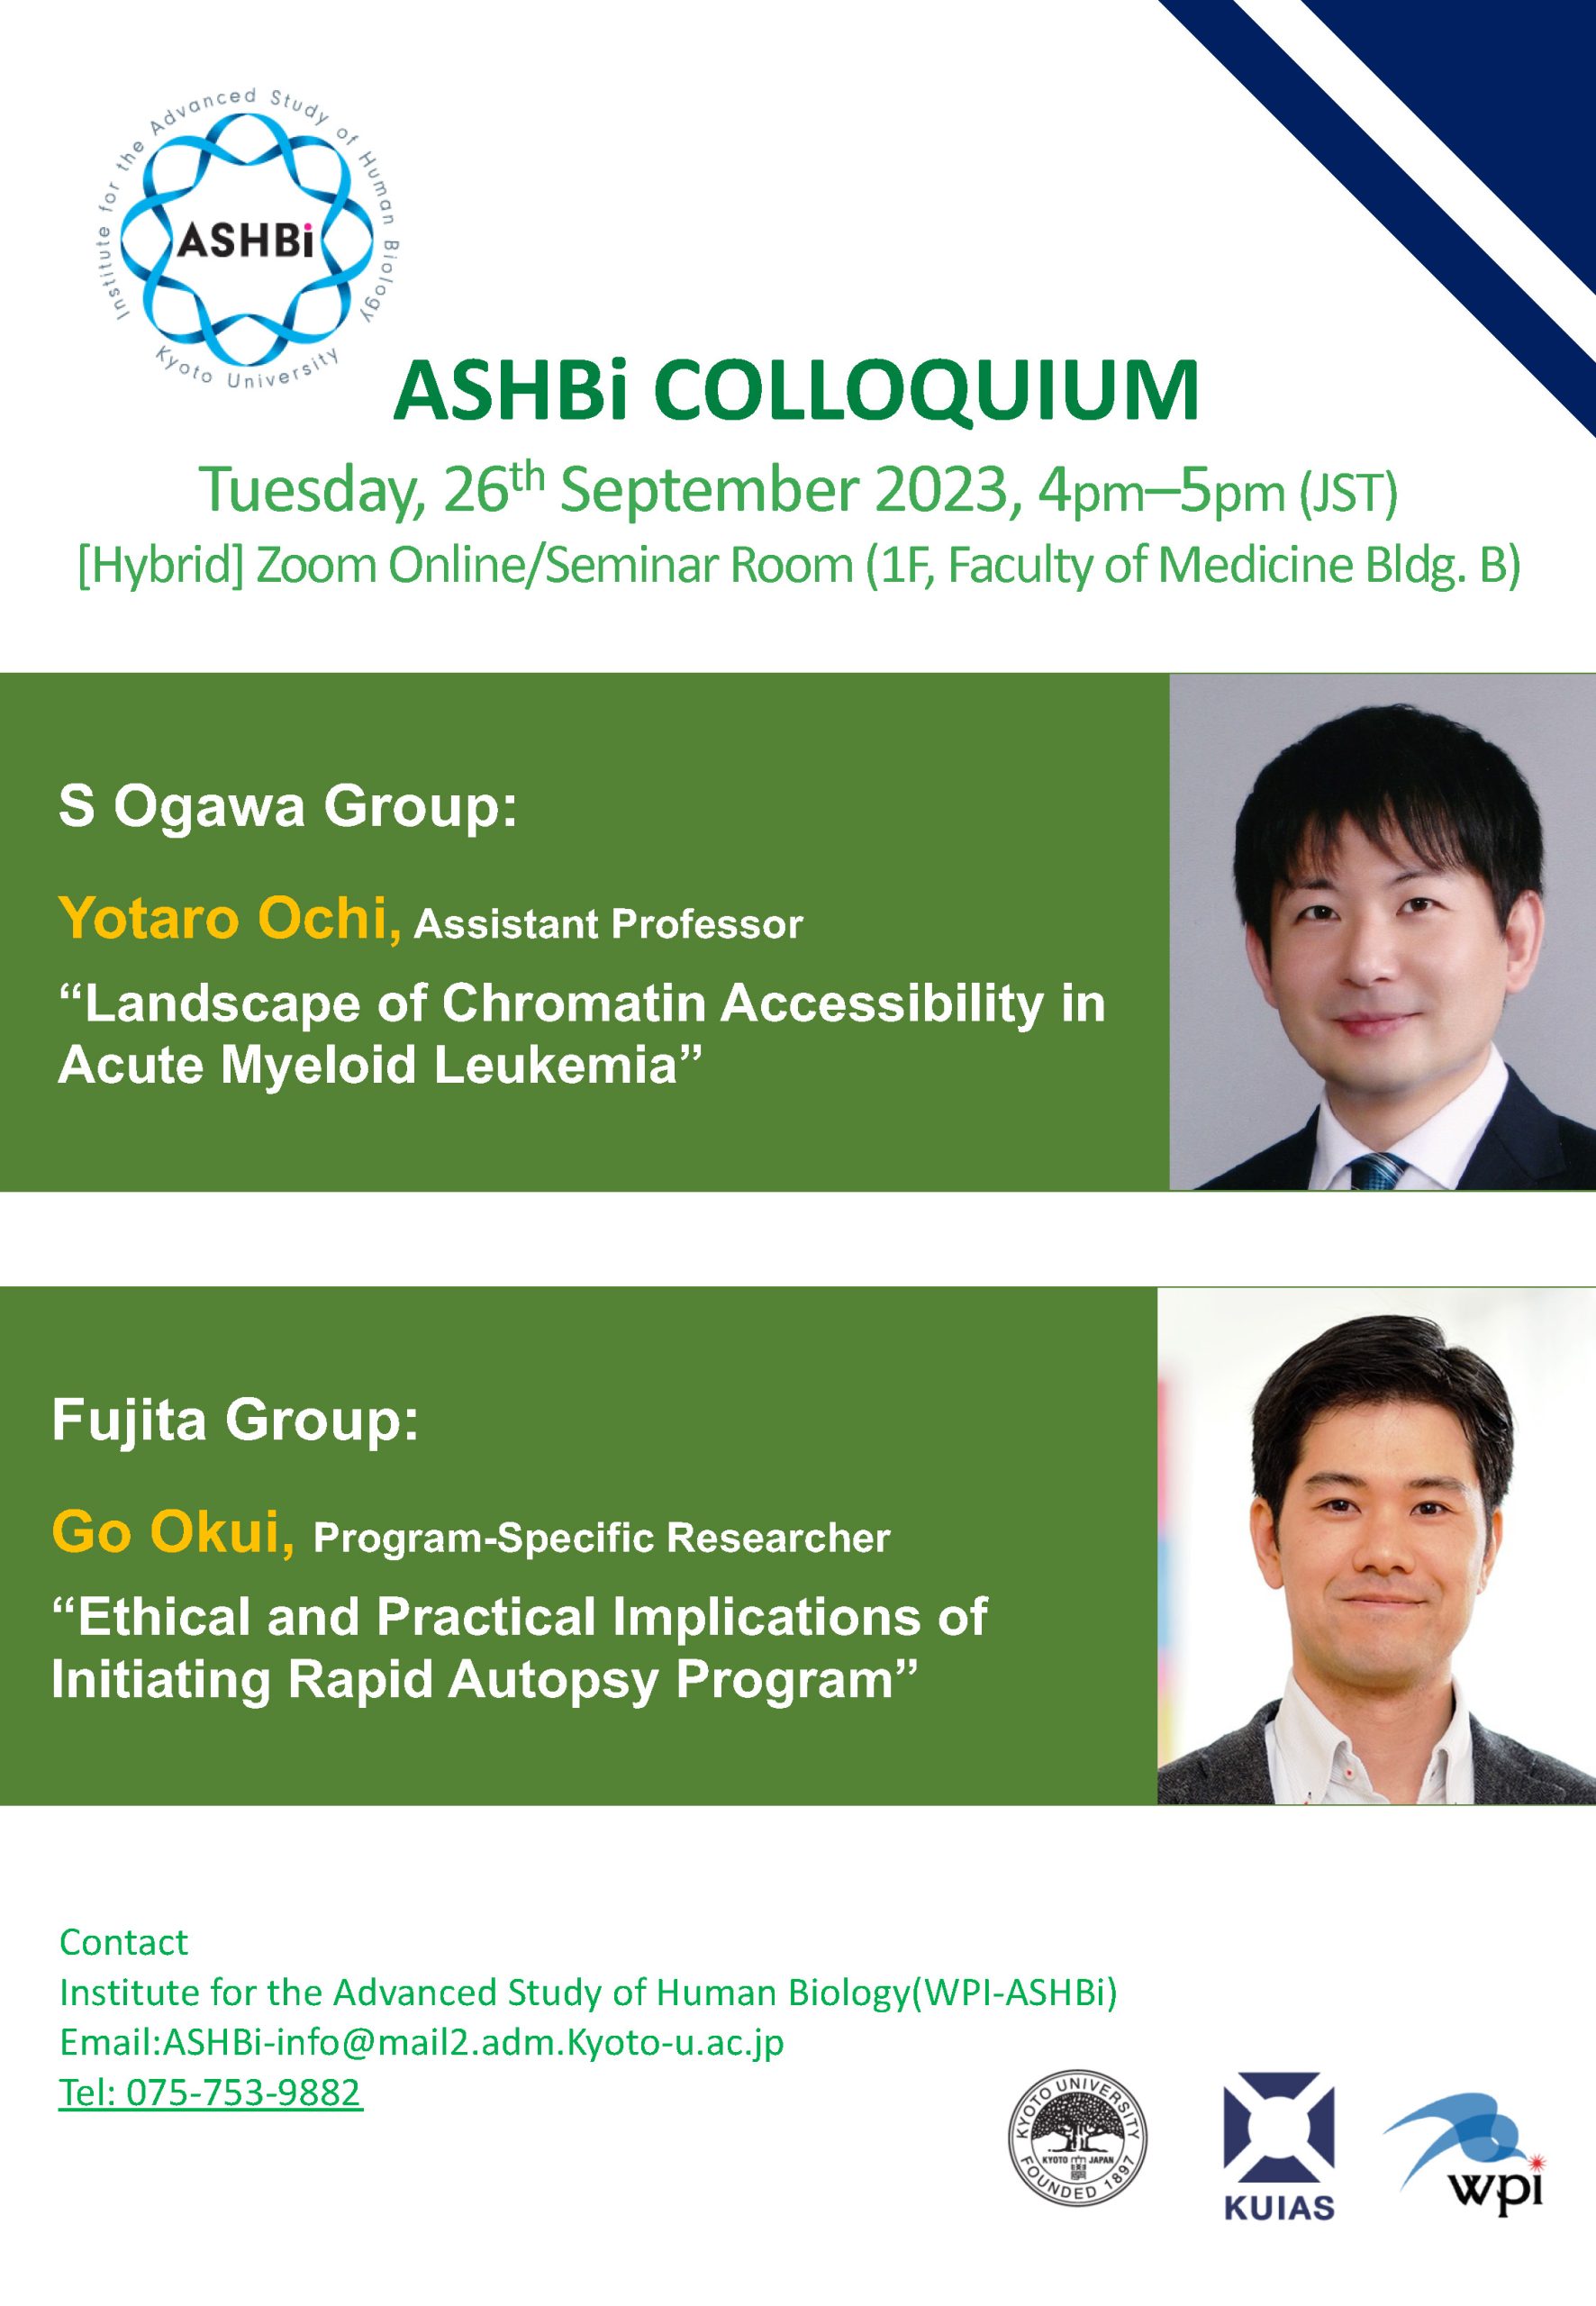 37th ASHBi Colloquium (S Ogawa Group & Fujita Group)